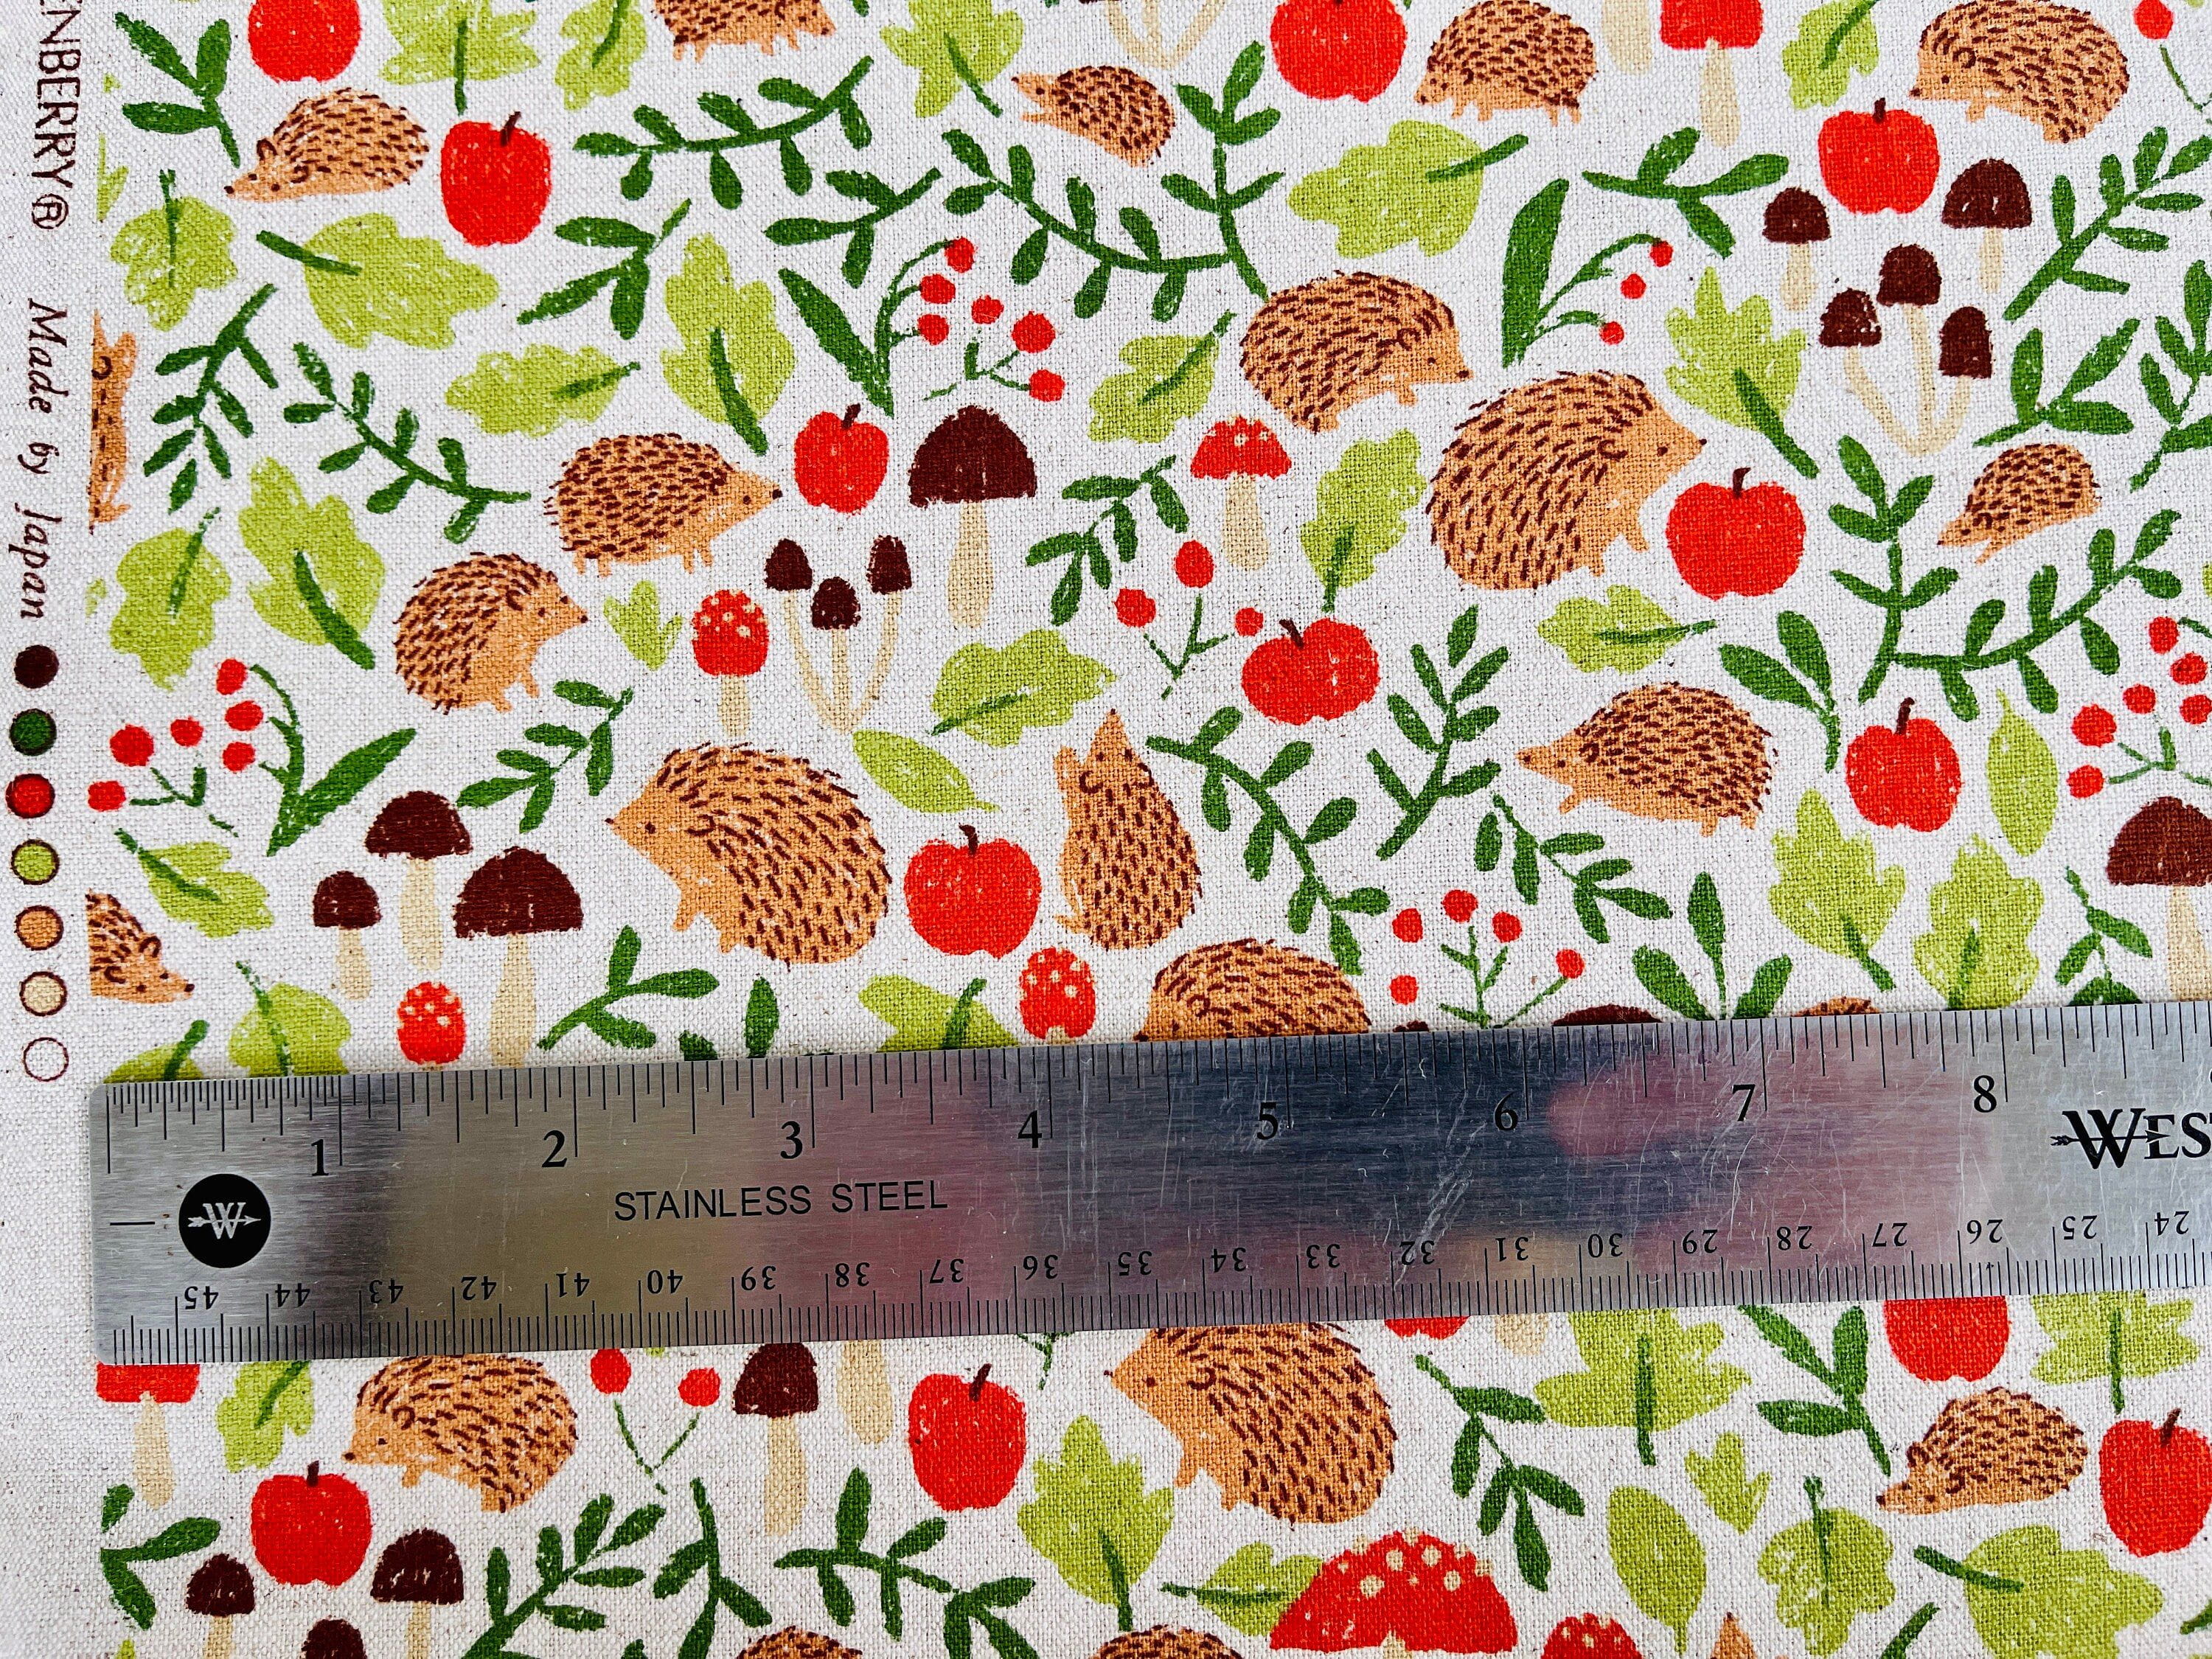 Porcupine - Hedgehog Fabric - Robert Kaufman Canvas - Sevenberry - C5620148